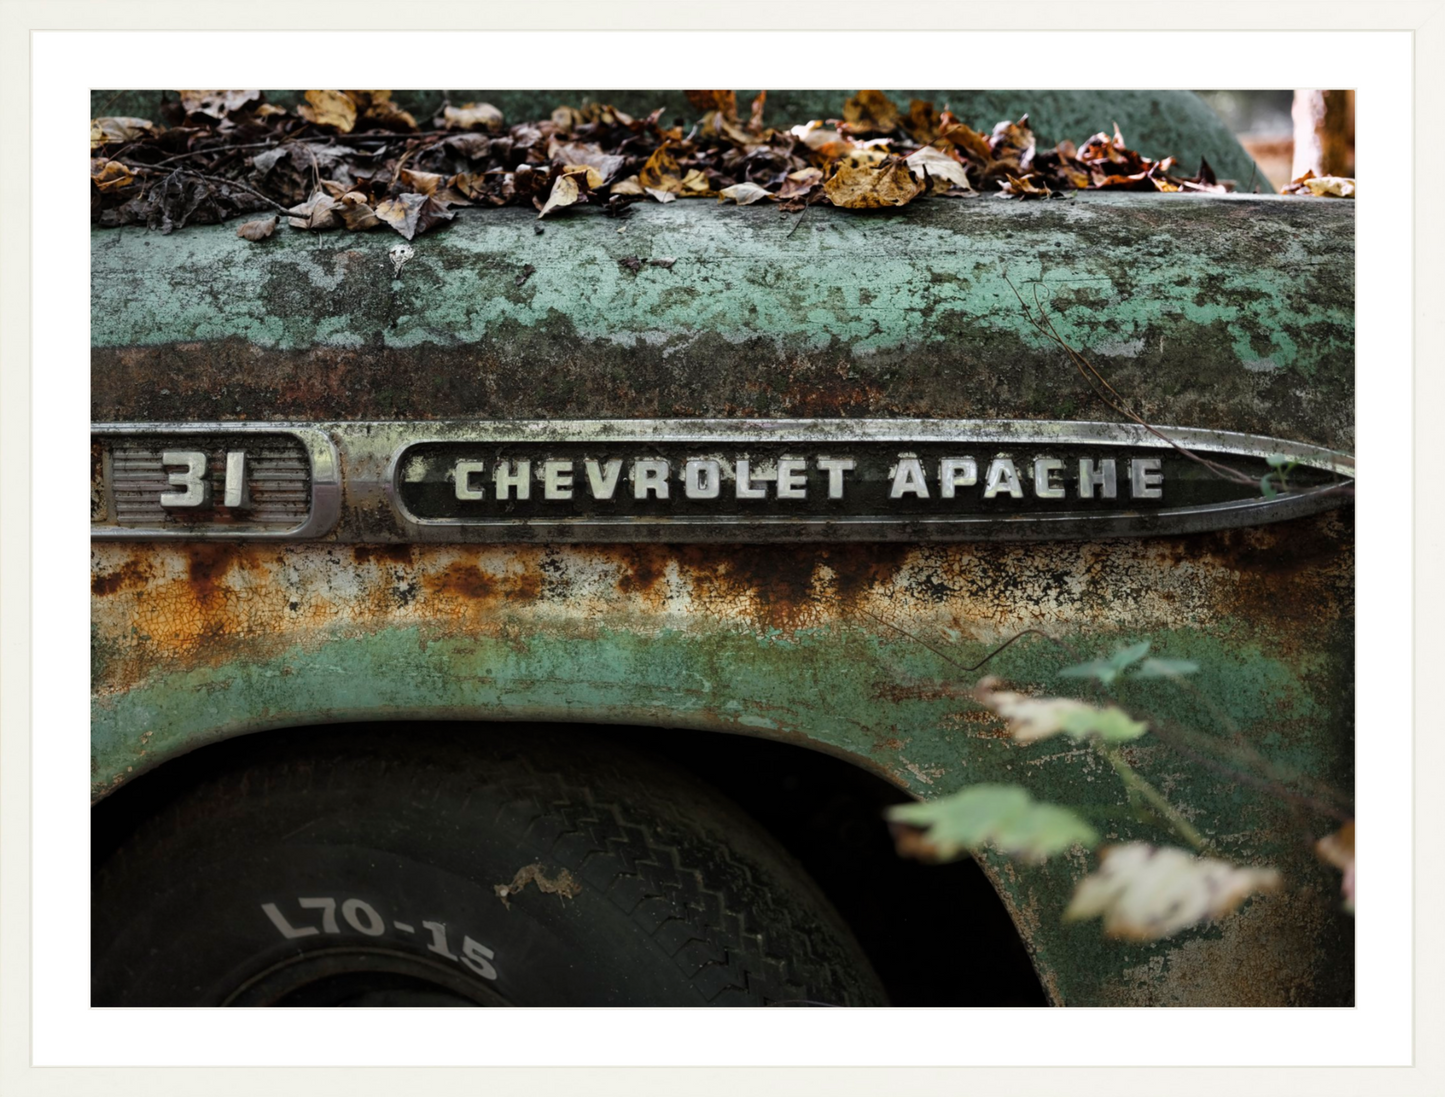 Chevy Apache